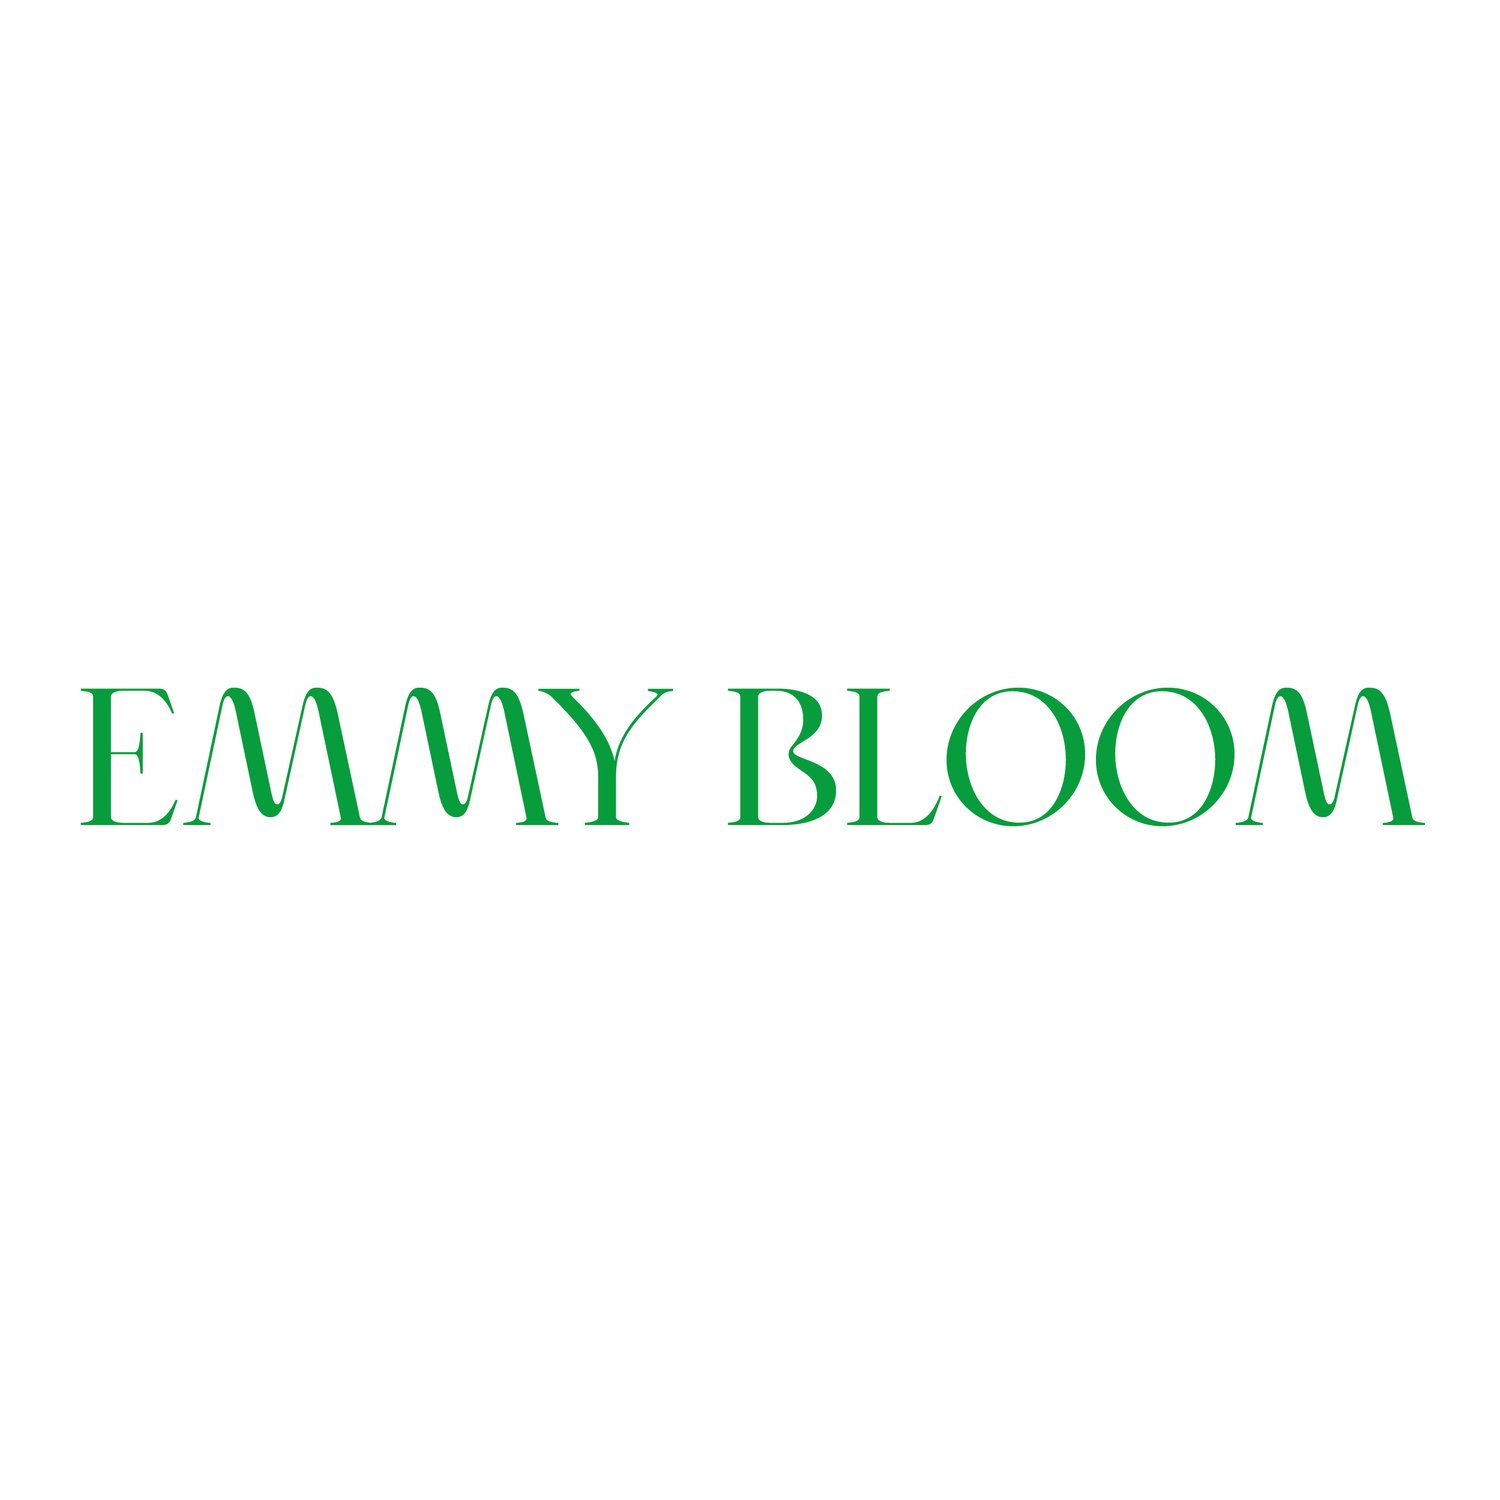 EMMY BLOOM